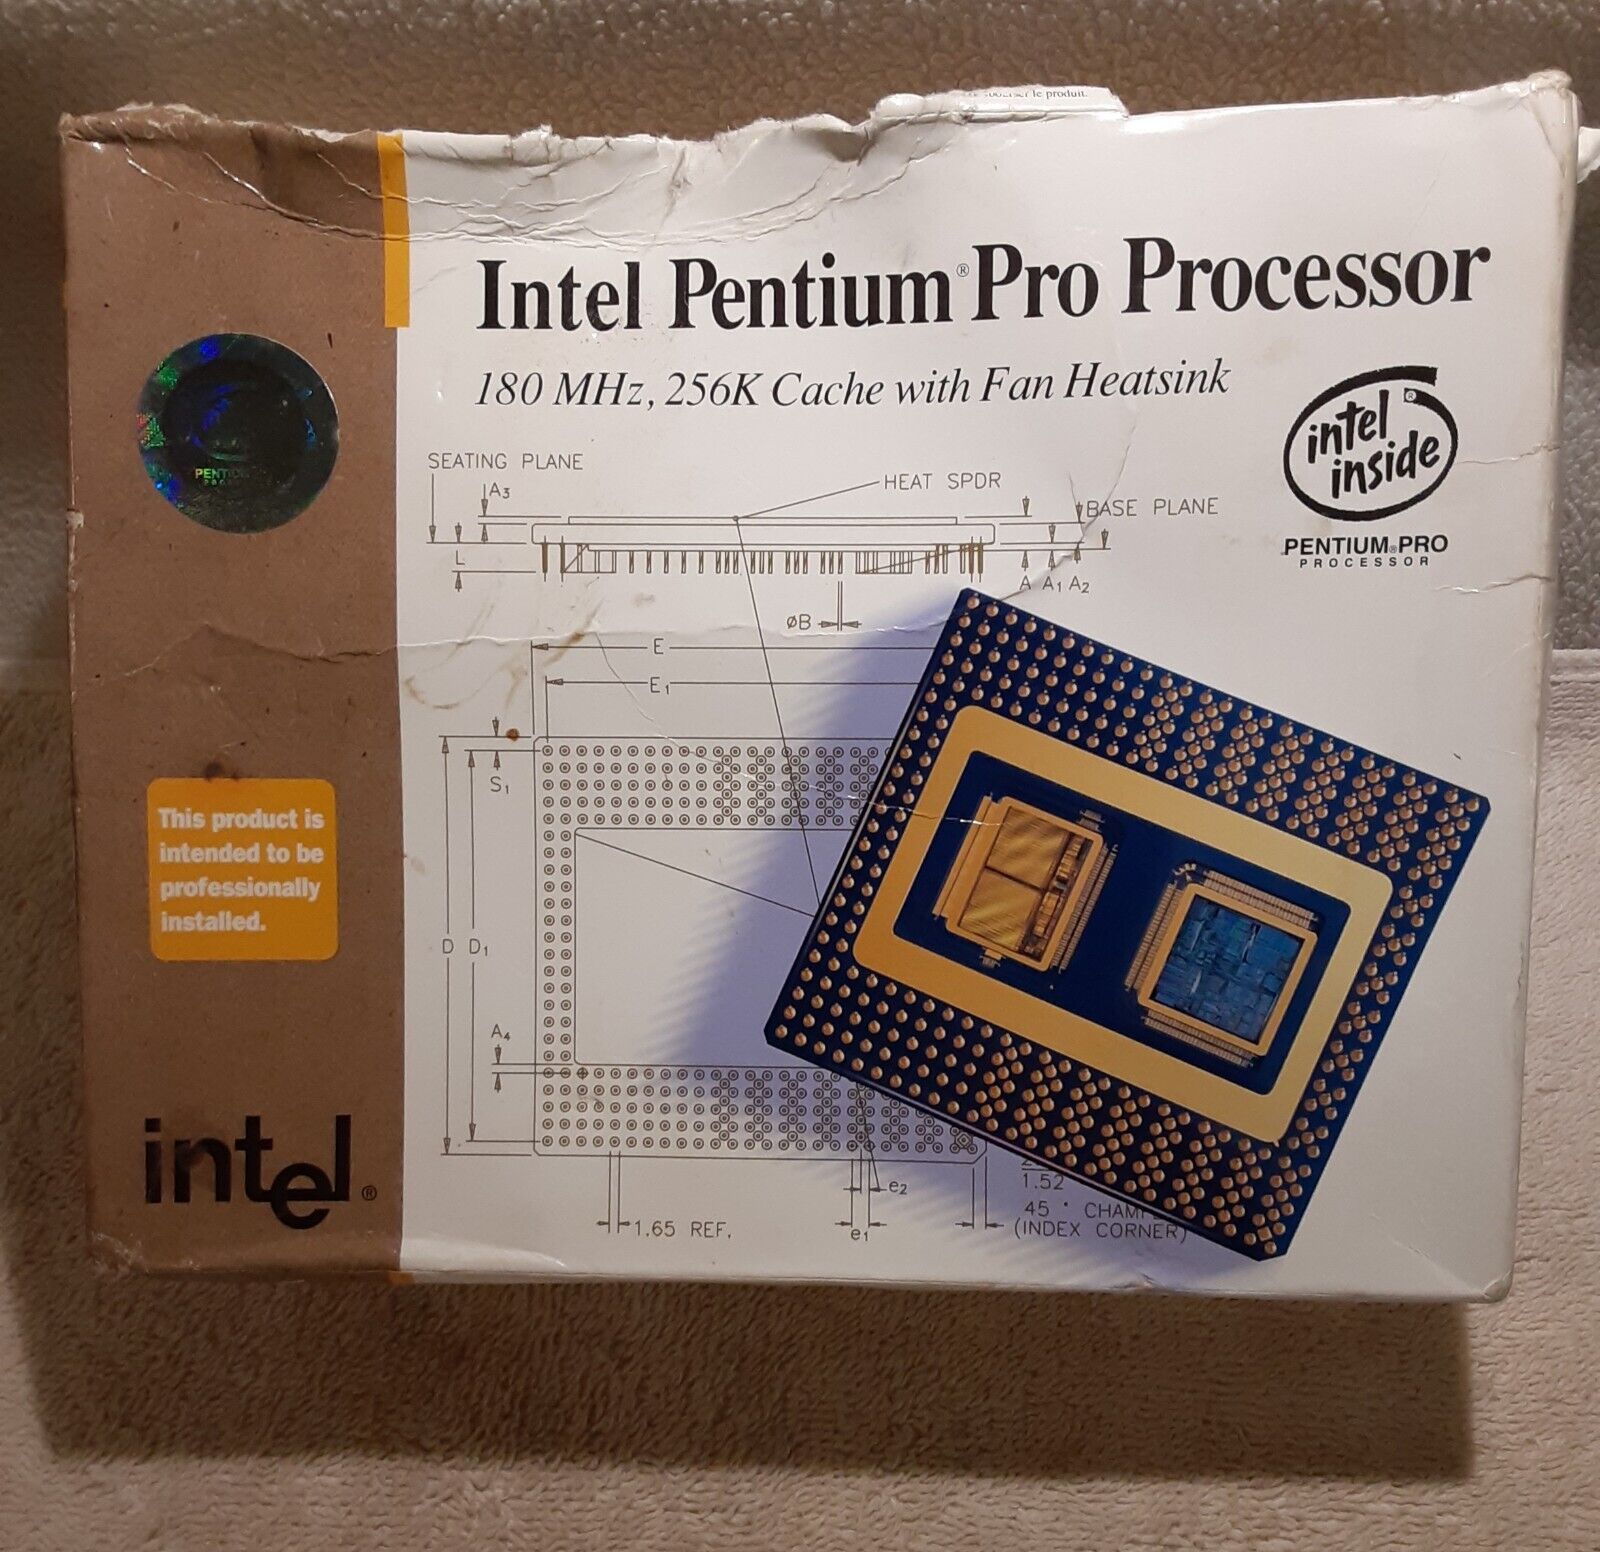 NEW Vintage Intel Pentium Pro Processor 180MHz 256K Cache with Fan Heatsink